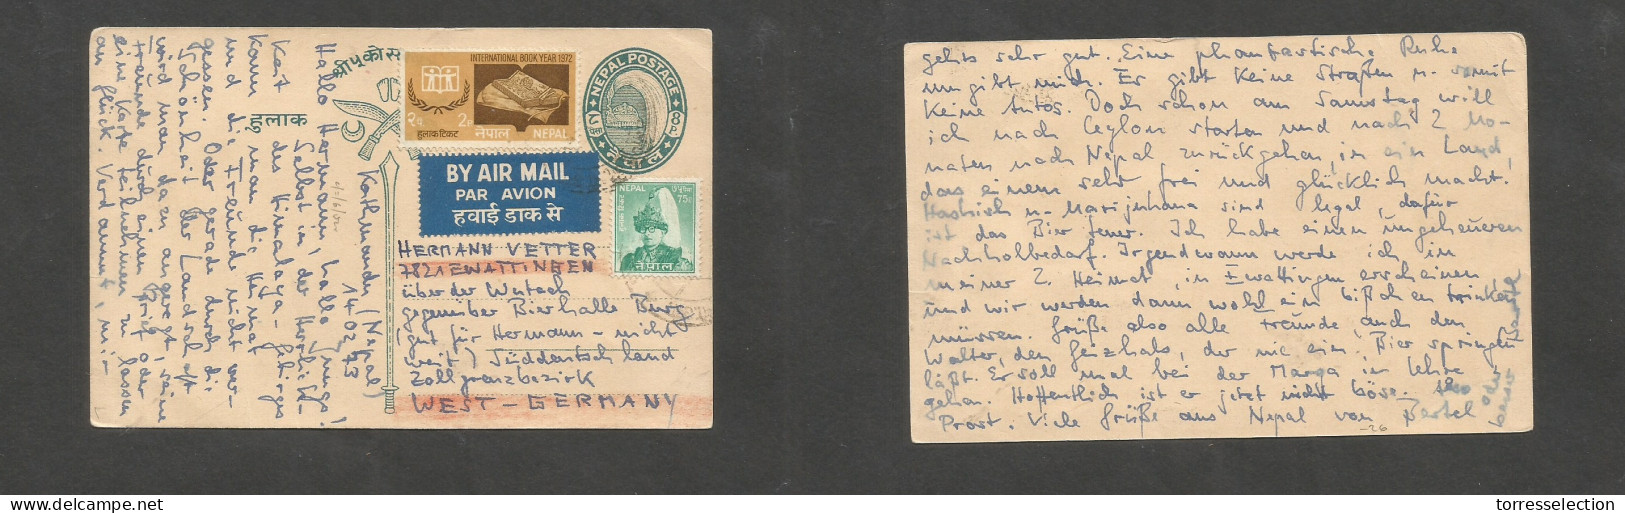 NEPAL. 1973 (14 Febr) Kathmandu - West Germany, Ewattineen. 8p Stat Card + 2 Adtls On Airmail Usage. Fine. - Nepal